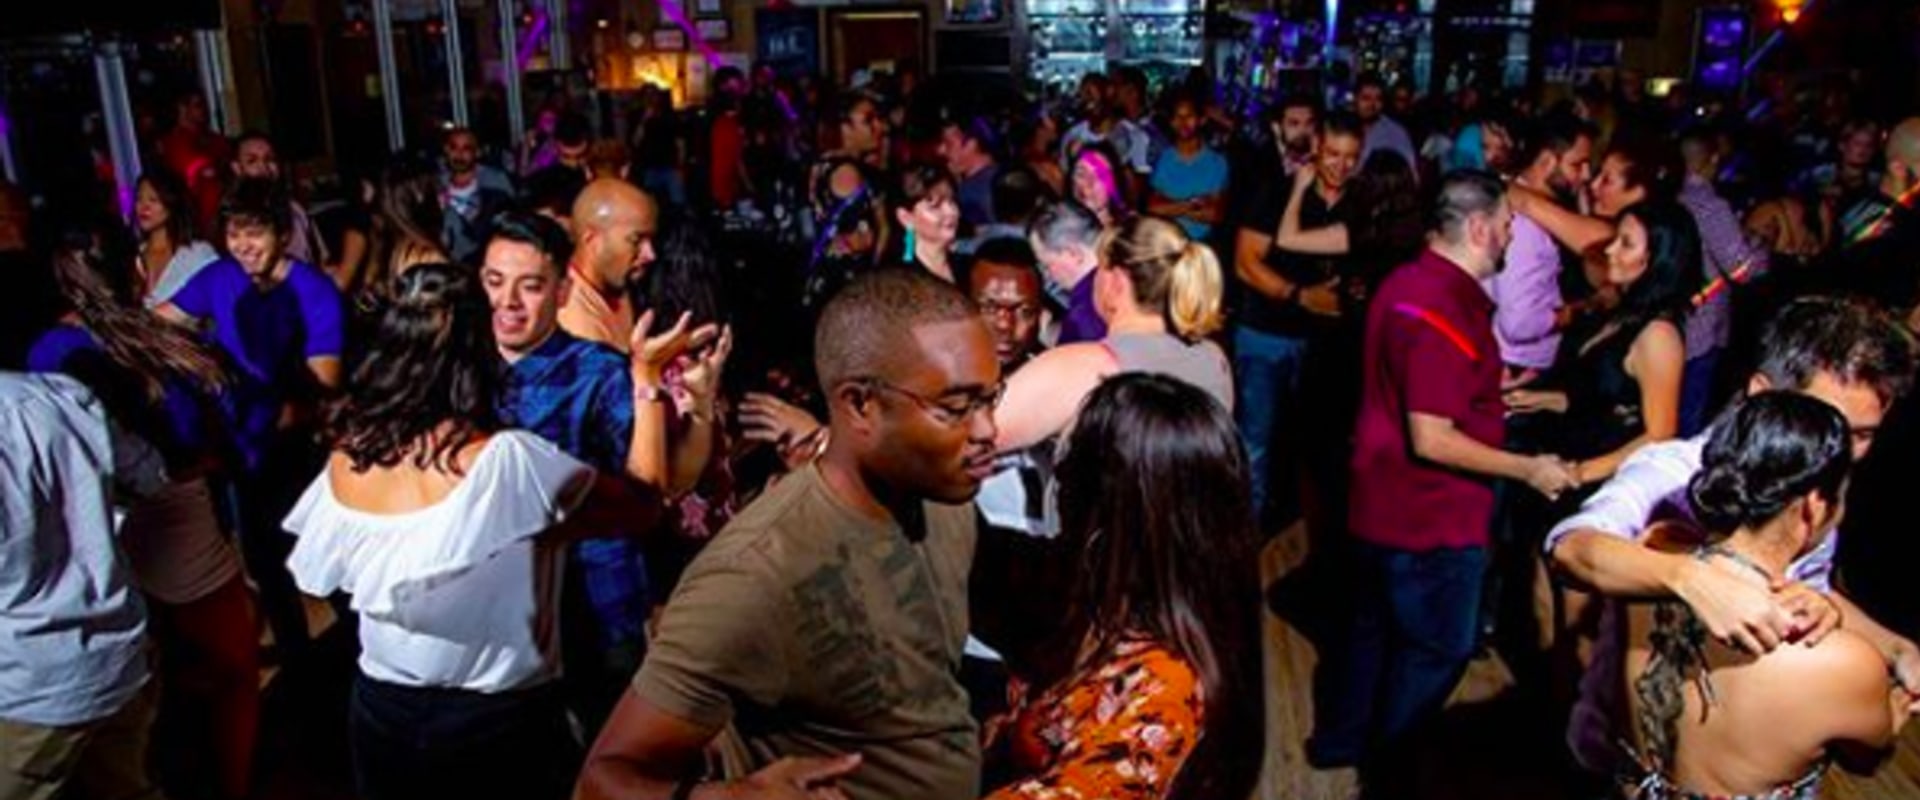 Heat Nightclub: A Comprehensive Overview of San Antonio's Hottest Dance Club